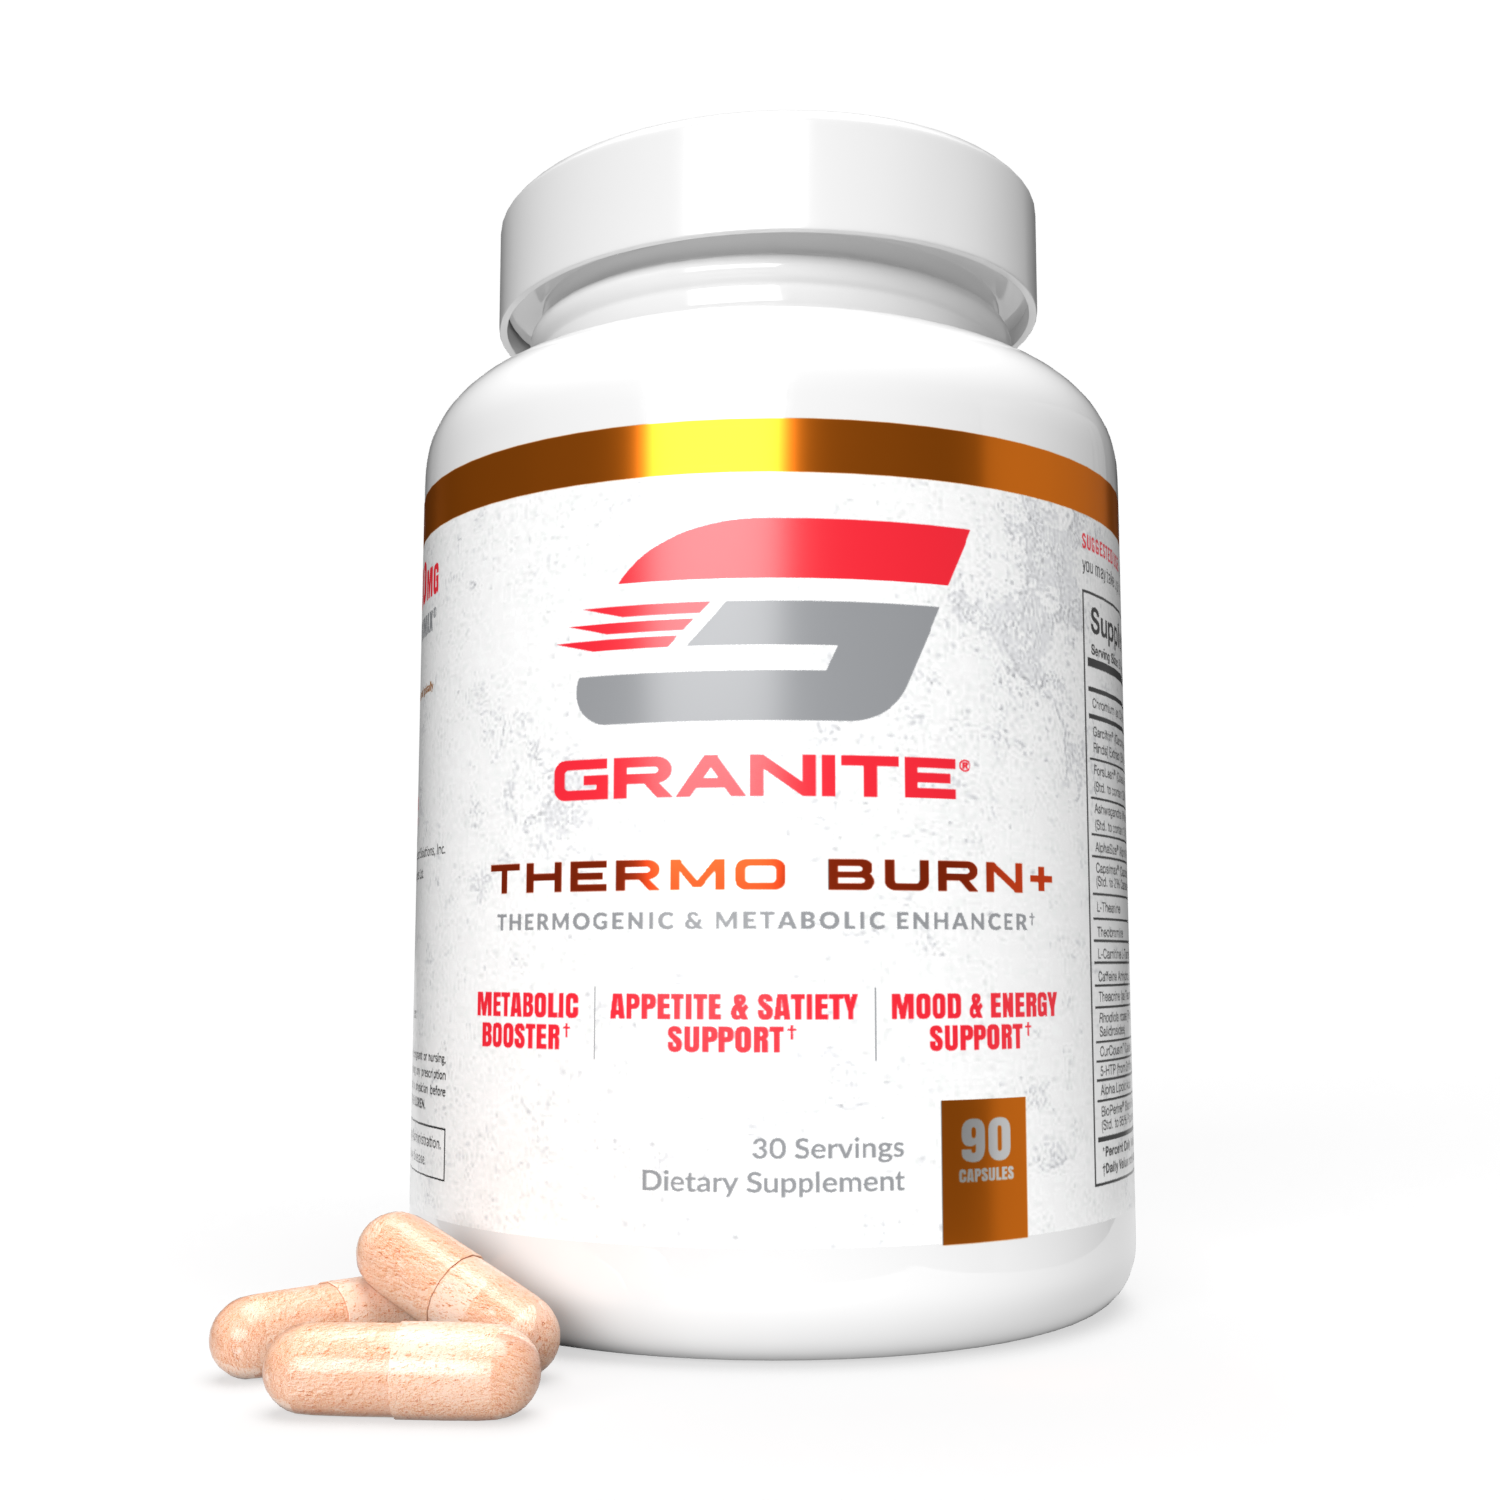 Thermo Burn  Health & Balance Vitamins – (USA) Health & Balance Vitamins